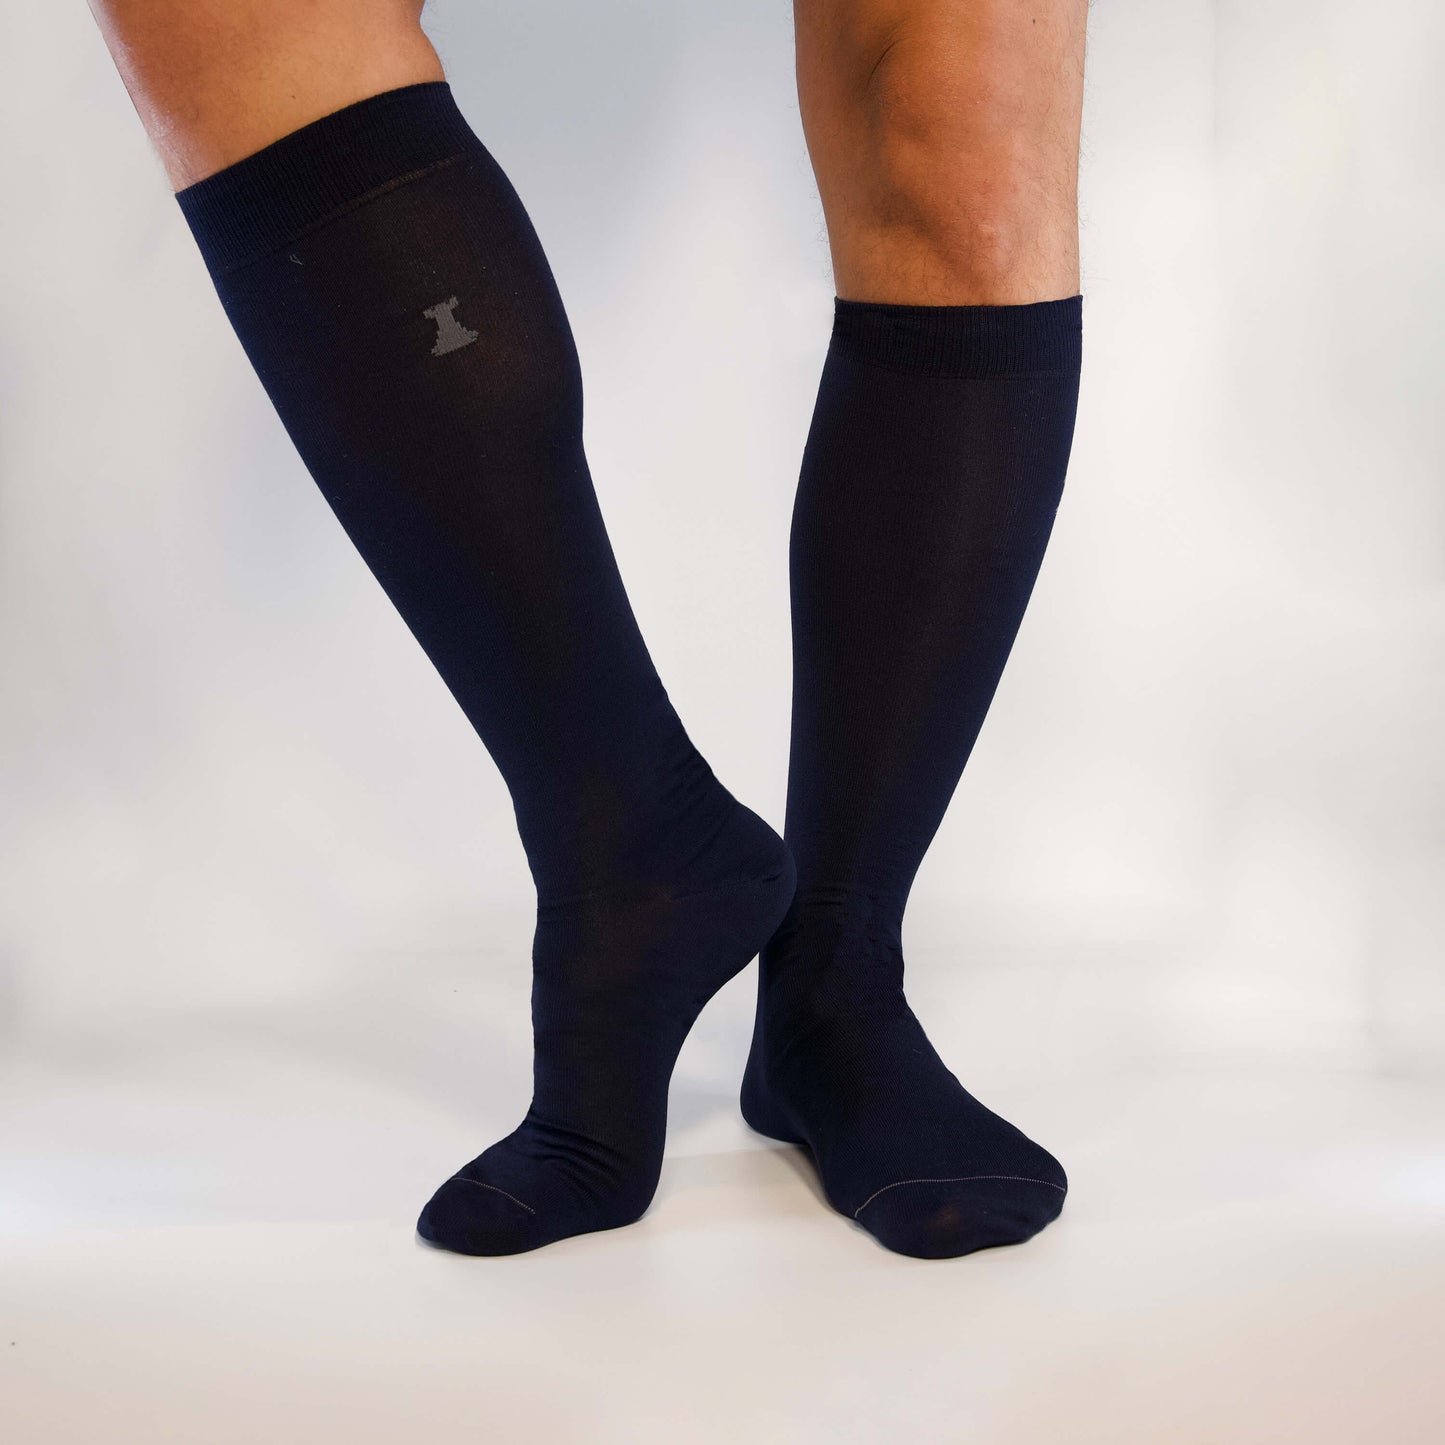 Federico II - Solid color knee high socks